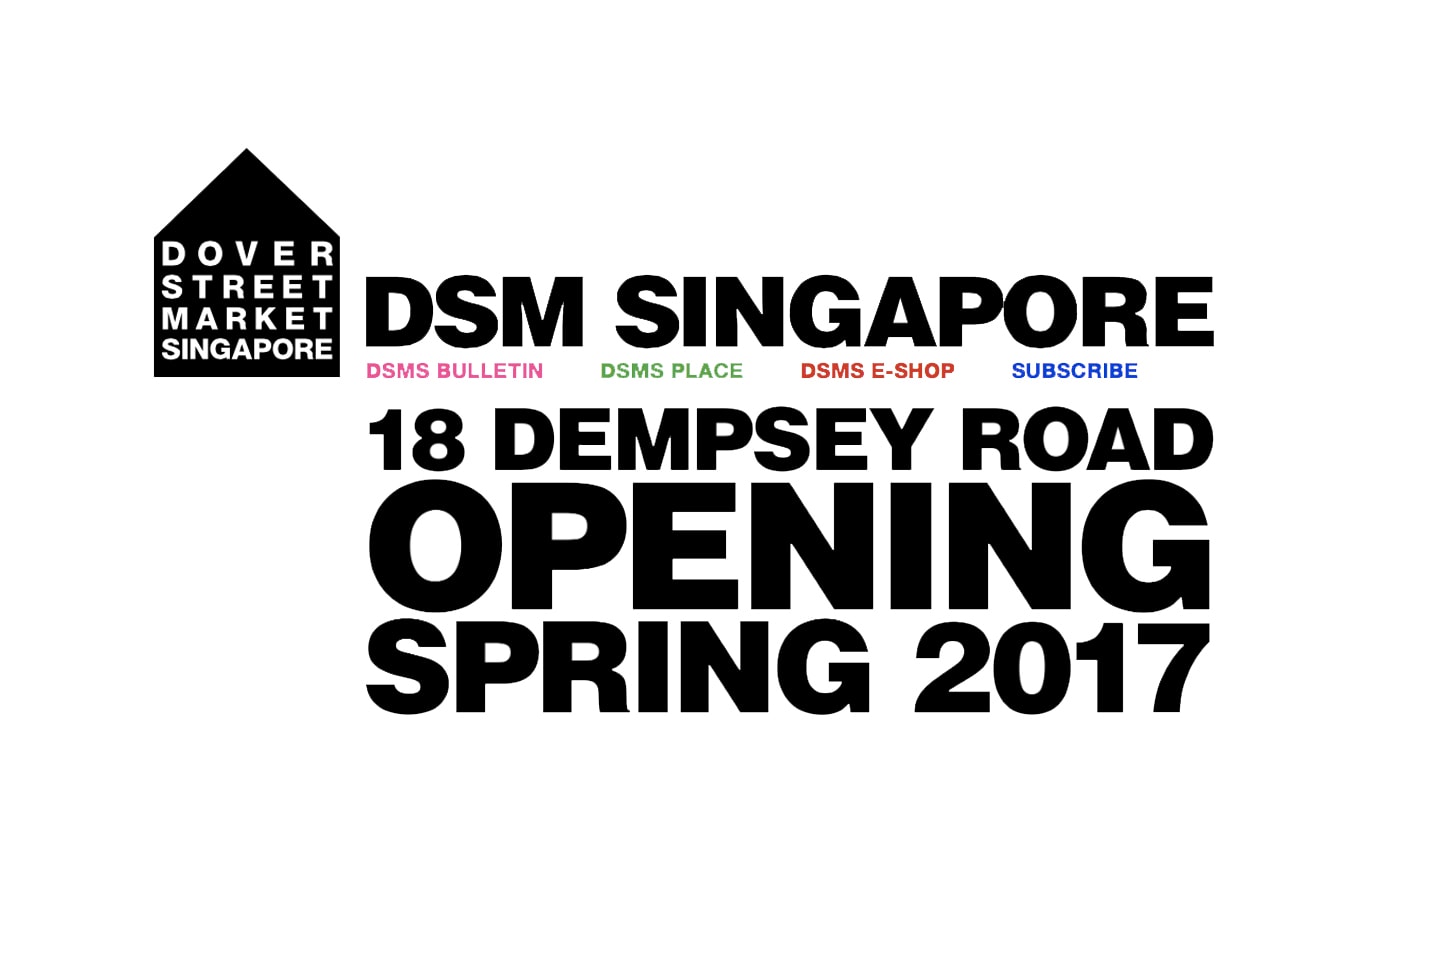 Dover Street Market Is Heading To Singapore Next Spring